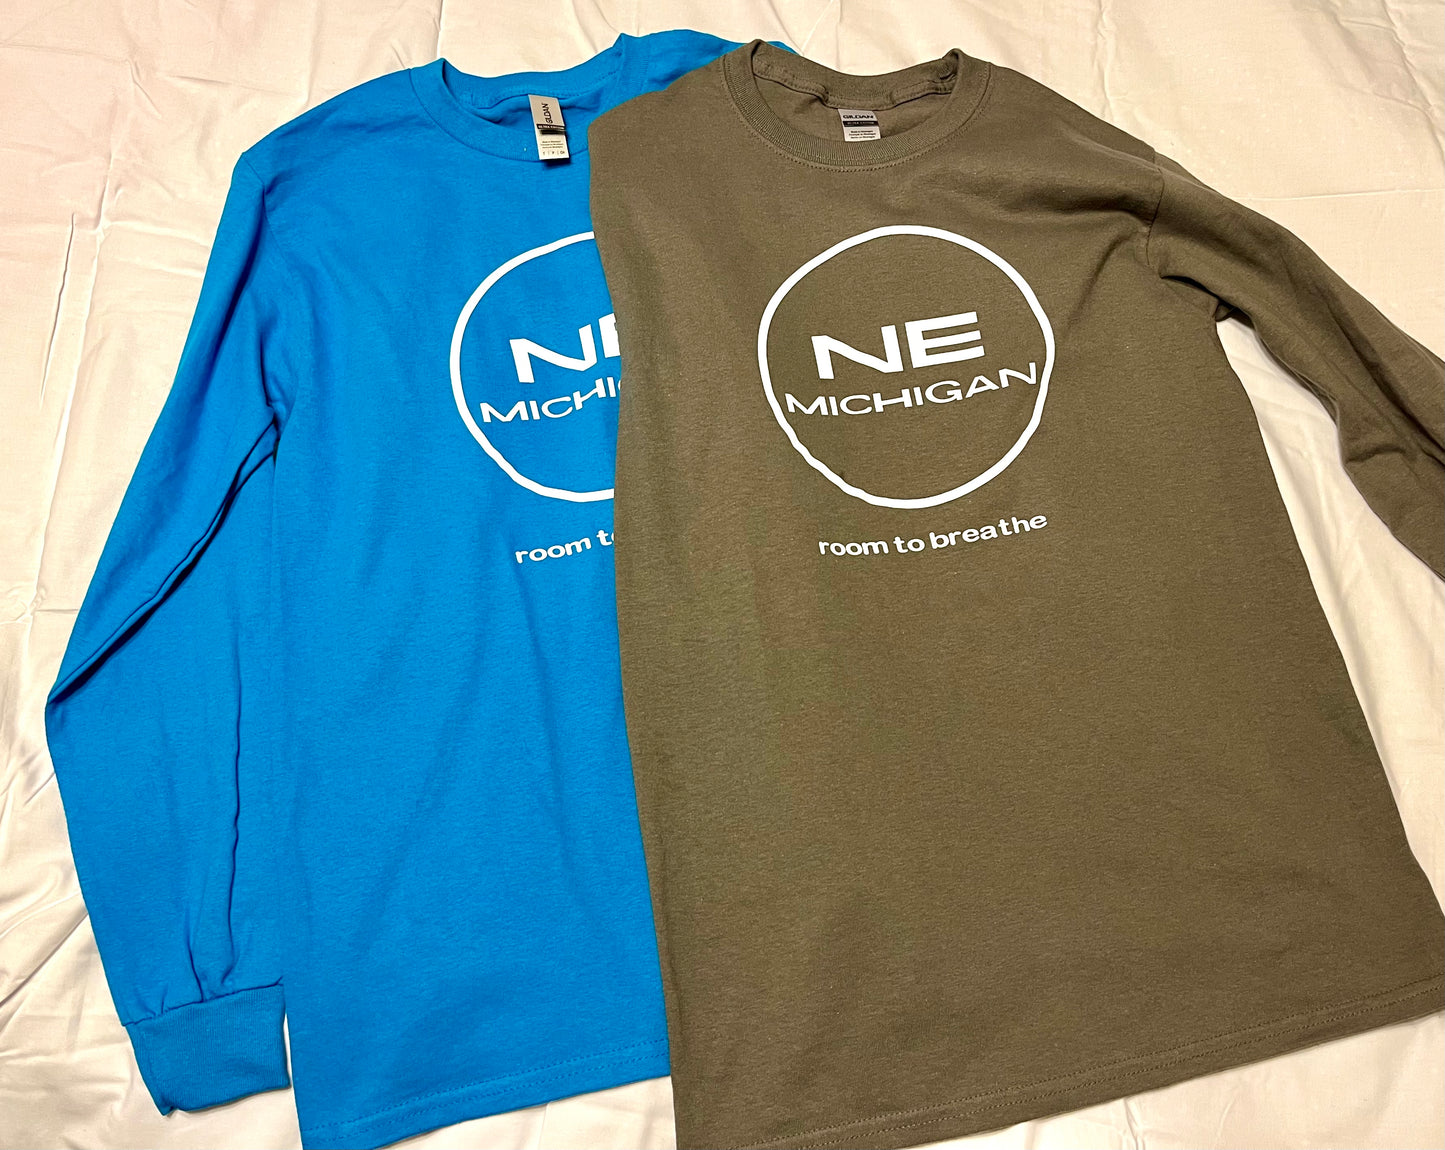 NE Michigan Long Sleeve T-Shirt: Sapphire (Medium)